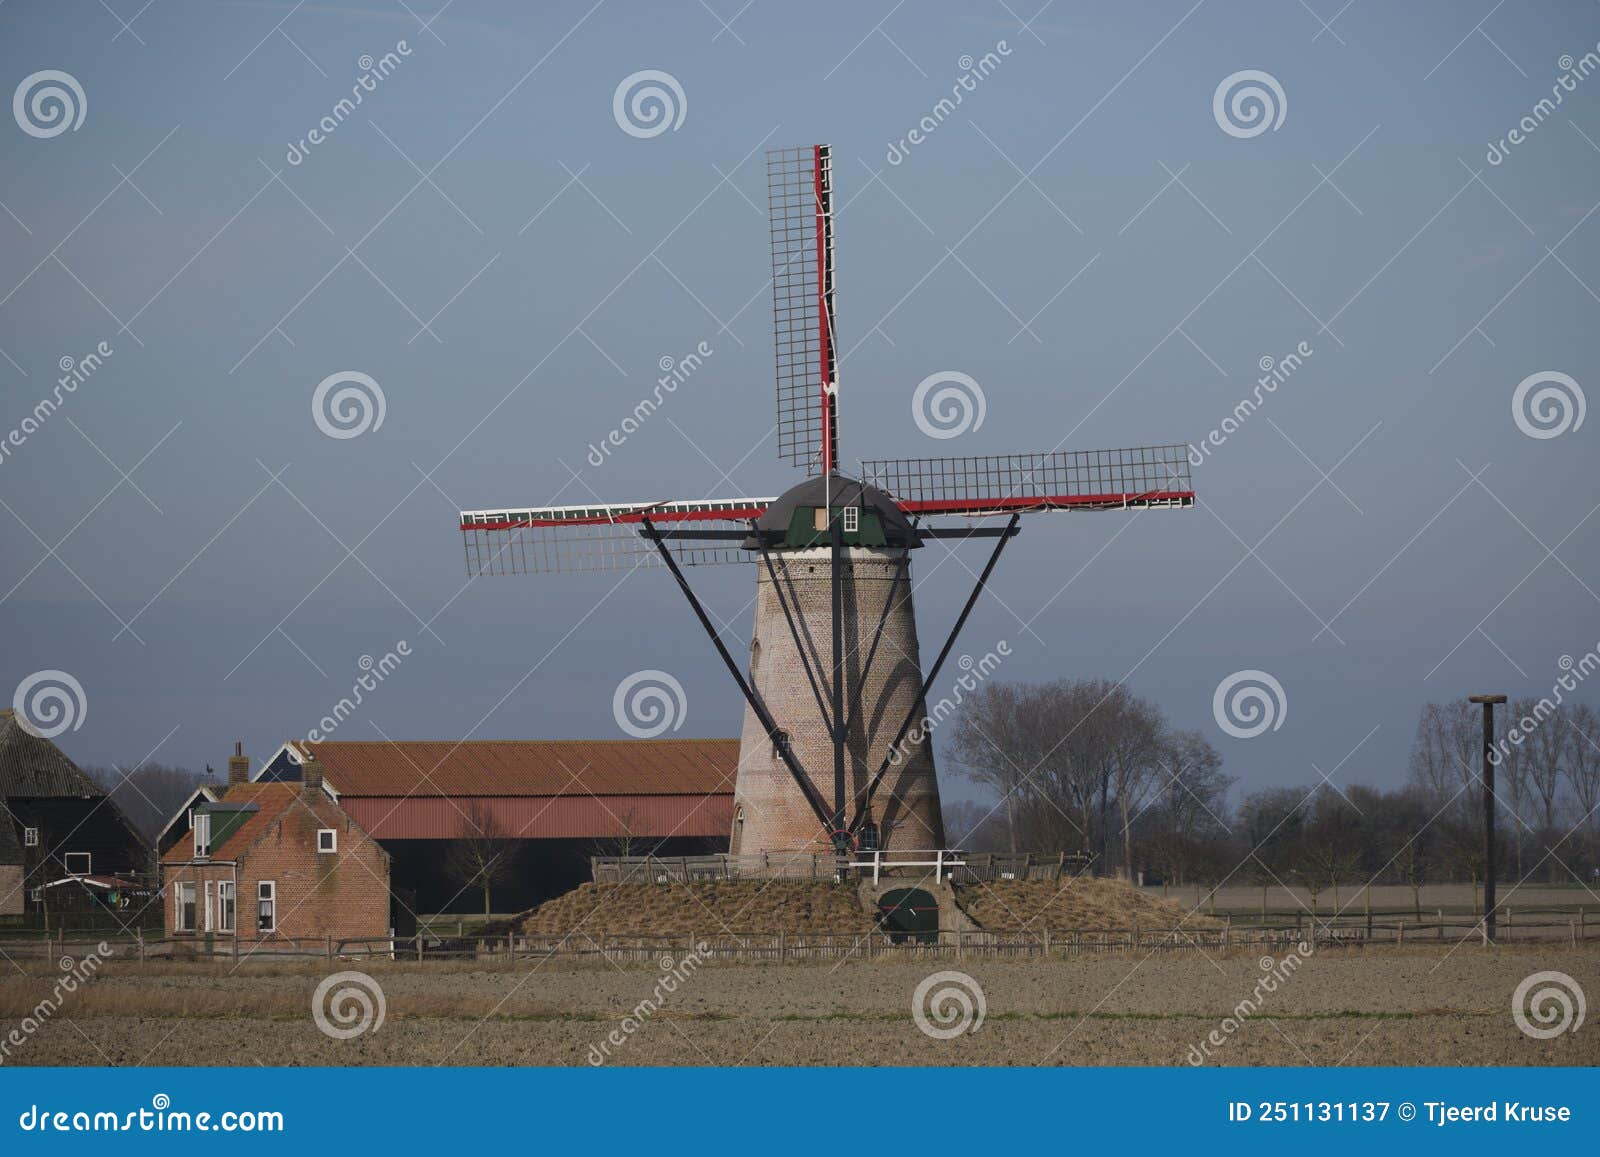 landscape with windmill. zeeland, the netherlands